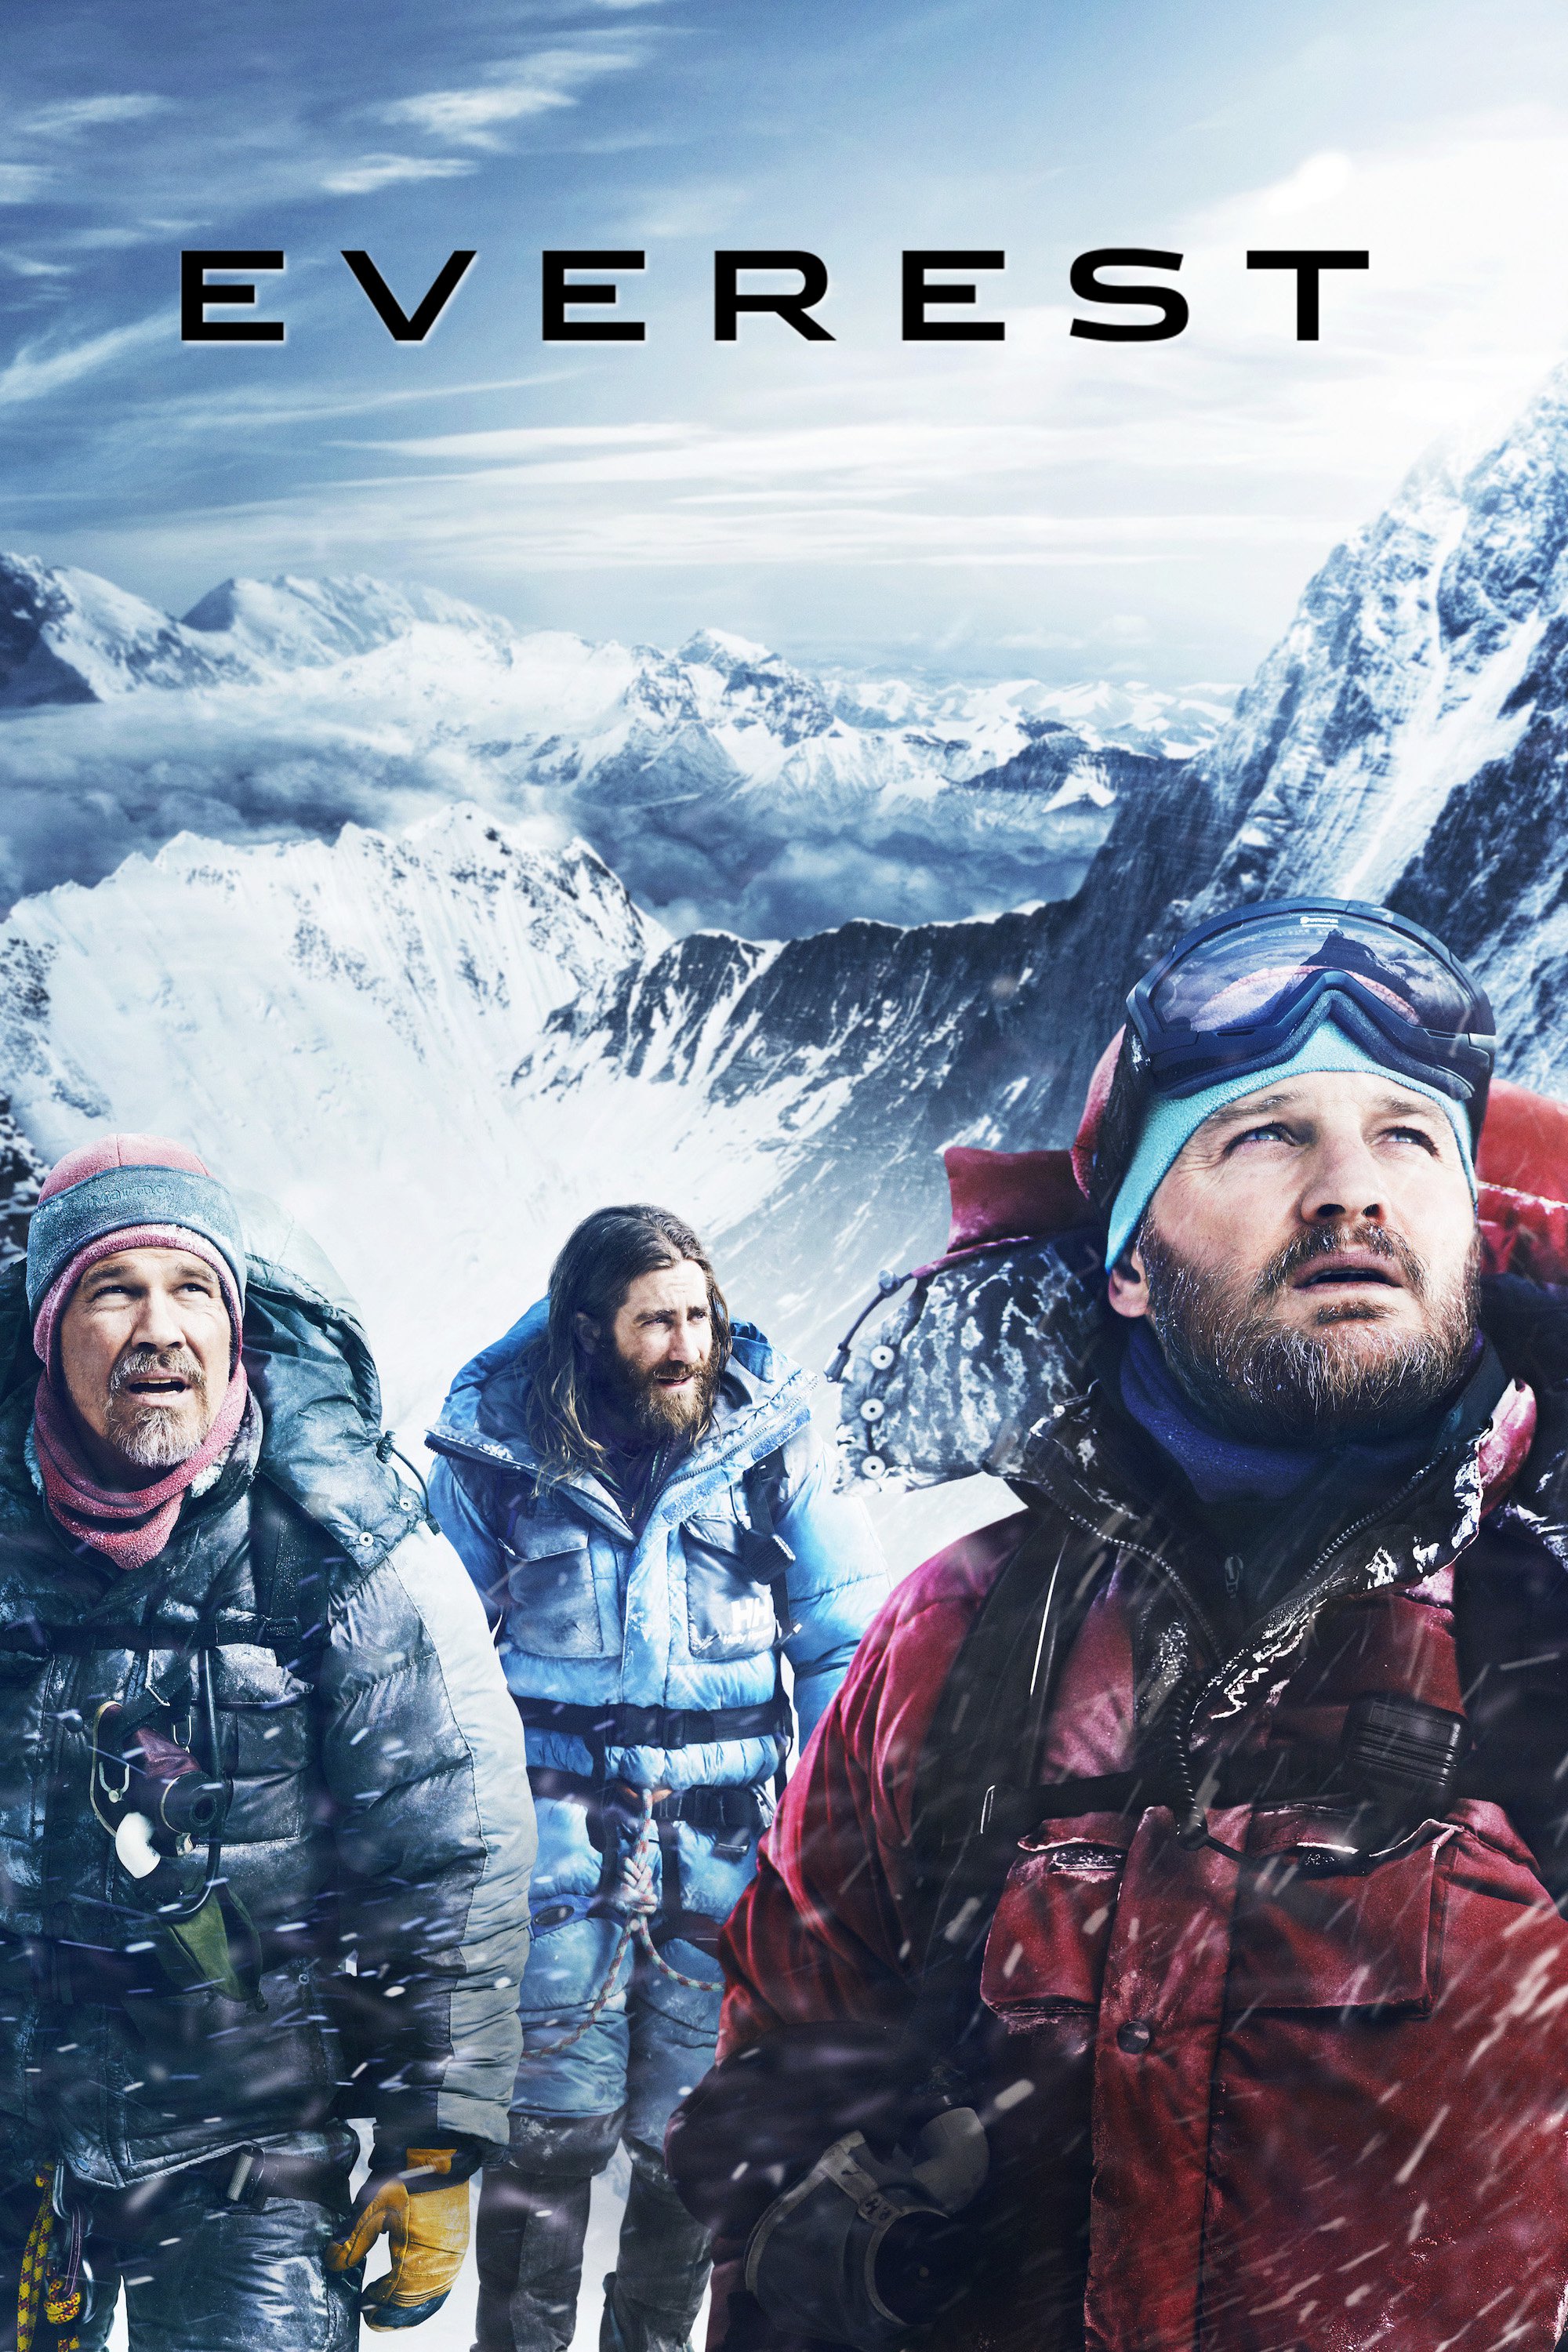 Plakat dla "Everest"